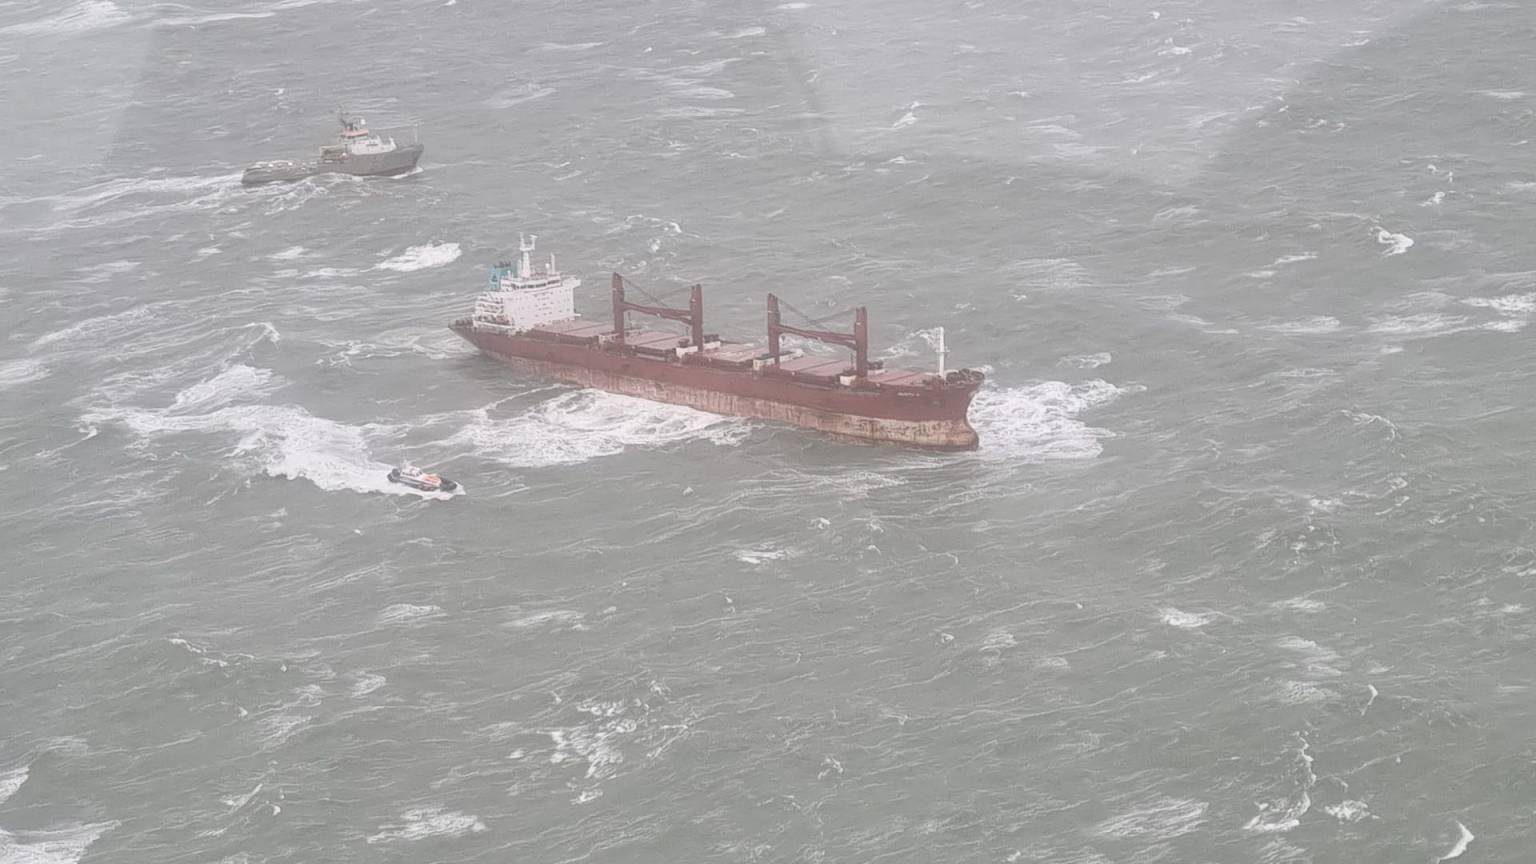 Update: Abandoned Bulk Carrier Julietta D Arrives in Port, Ending Frantic Rescue